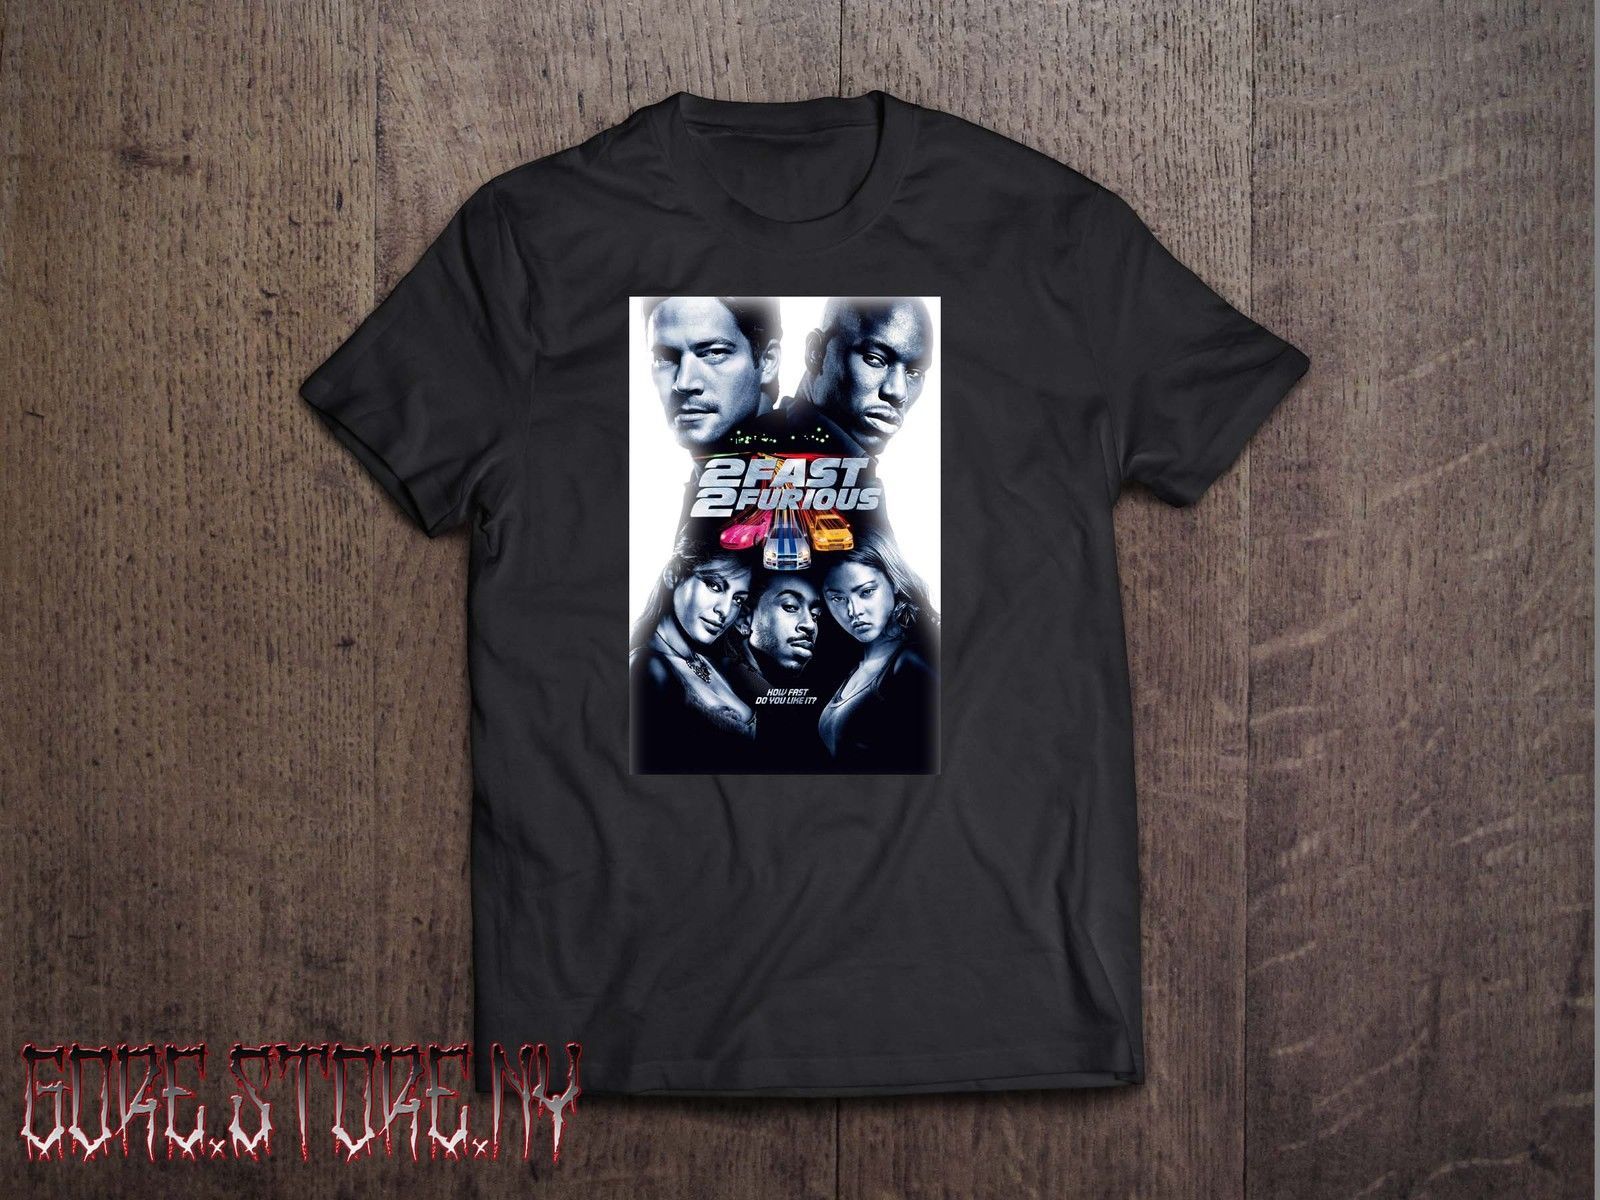 2 Fast 2 Furious Movie Shirt - T-Shirts